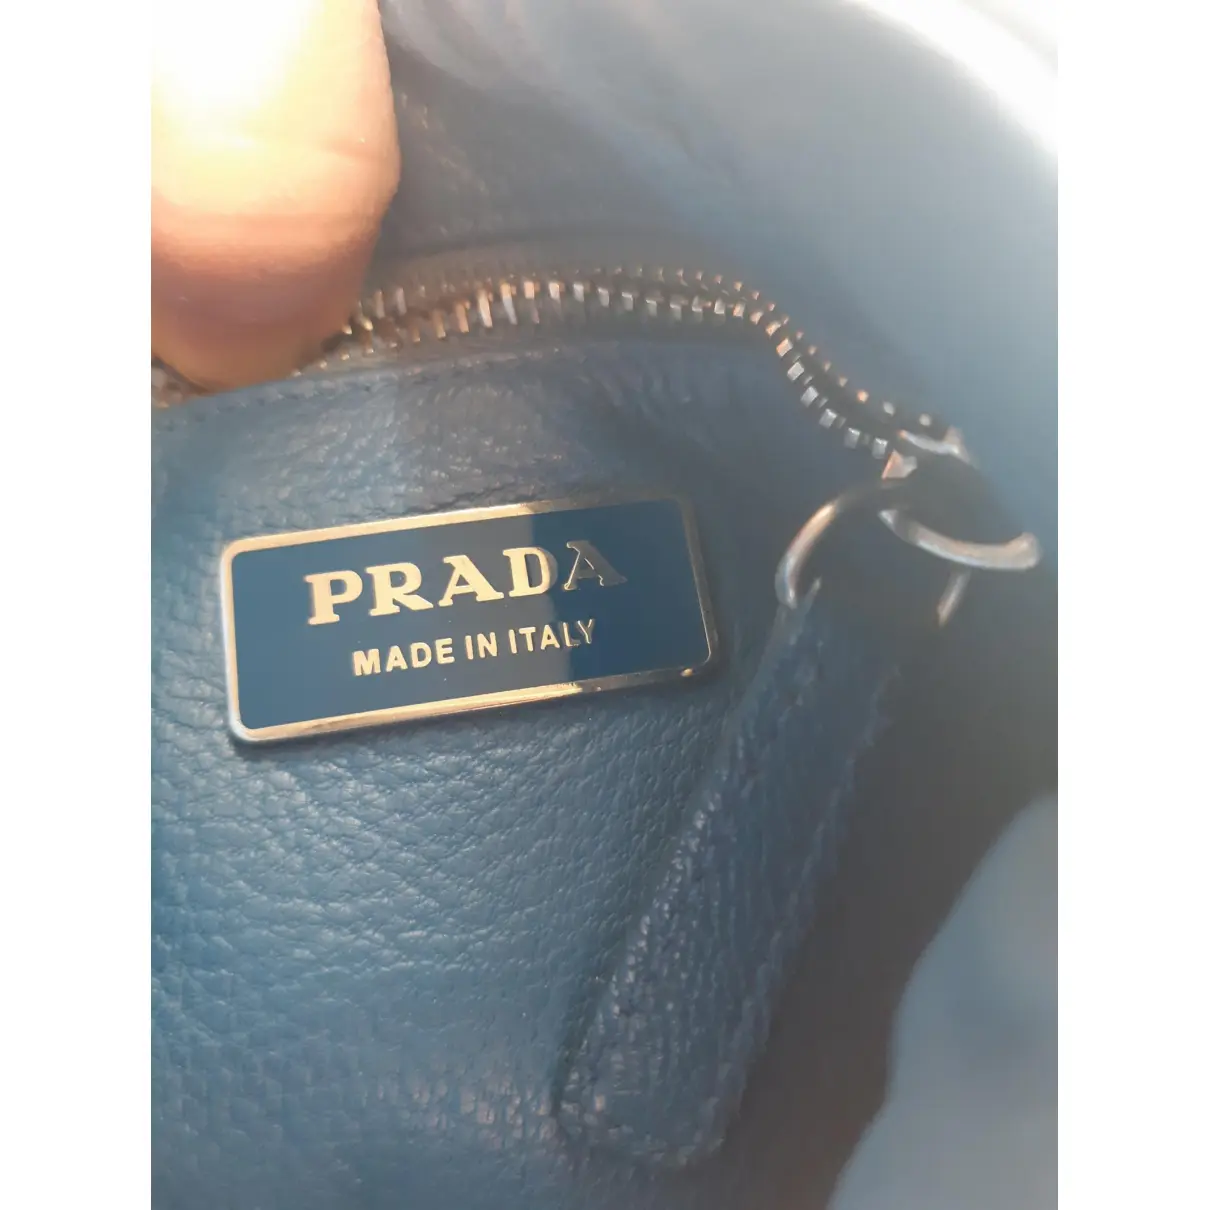 Sound leather handbag Prada